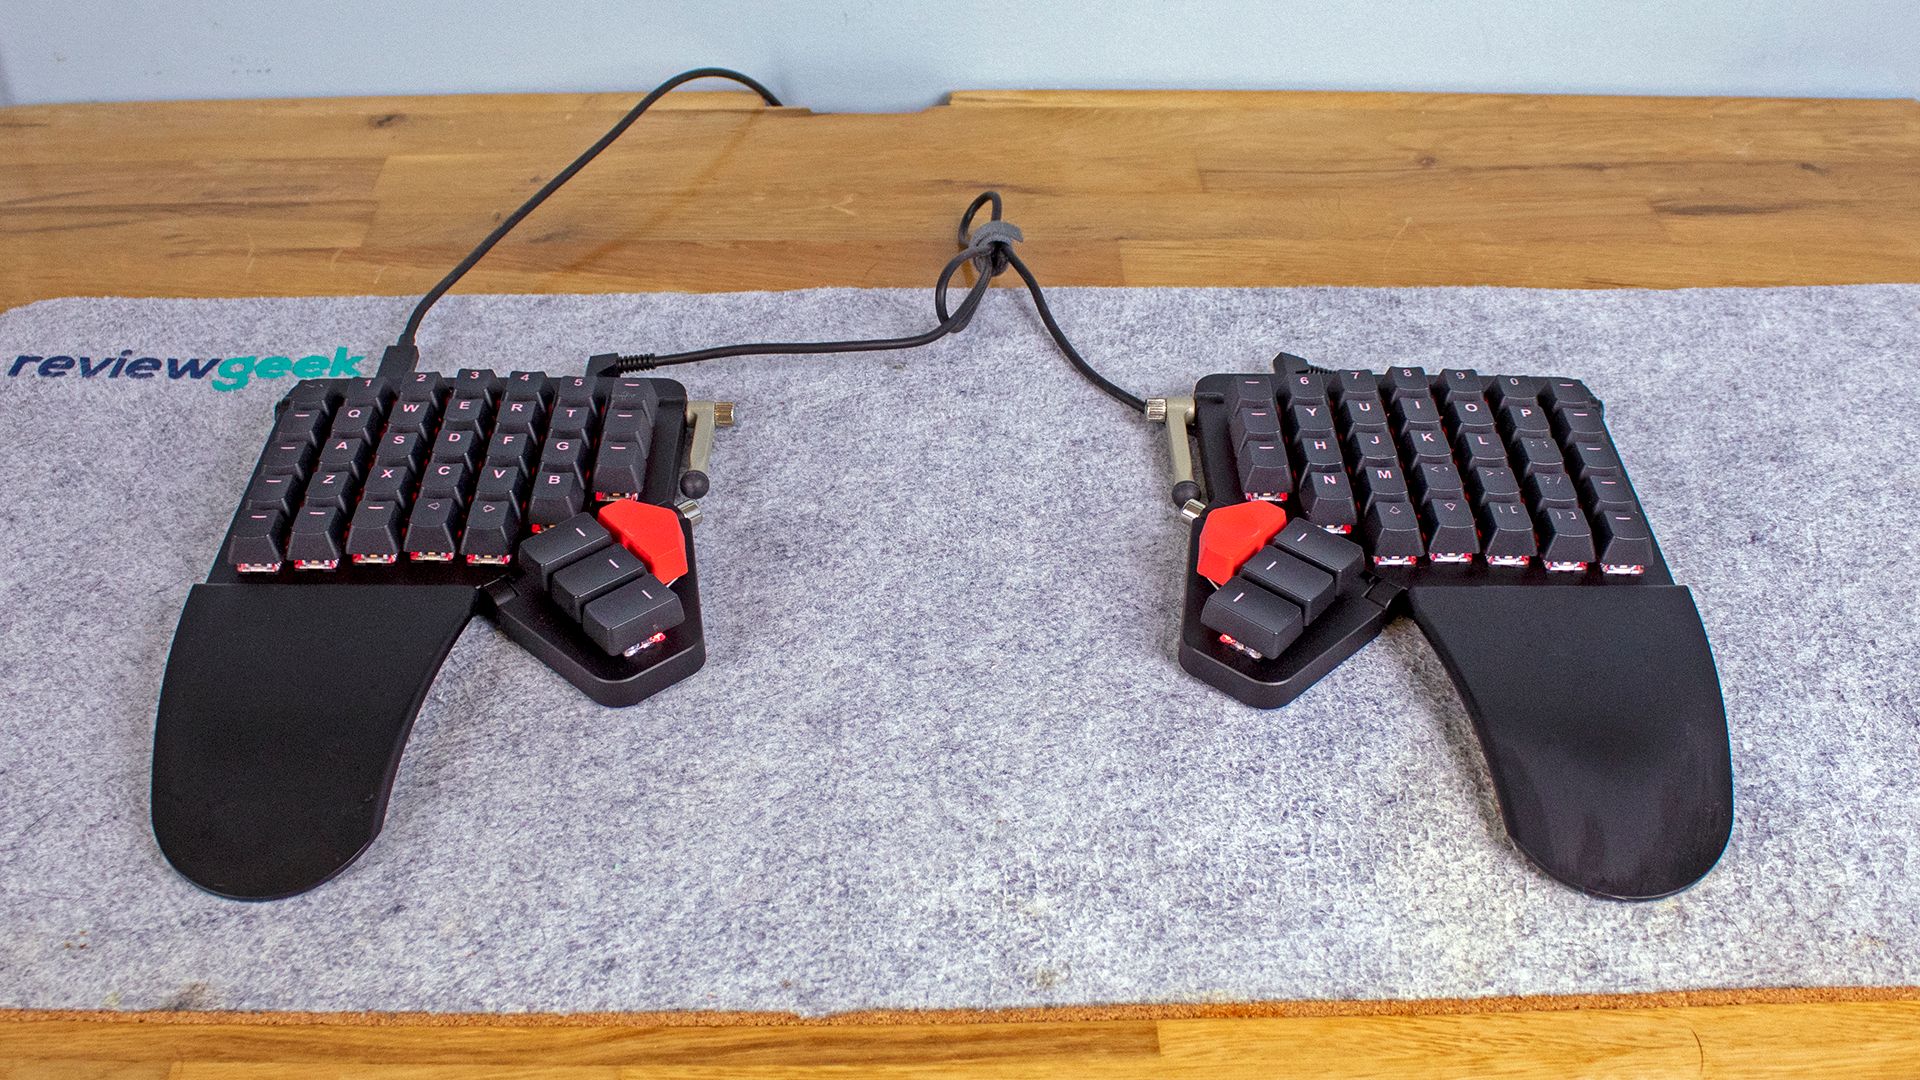 A Moonlander keyboard on a felt desk mat